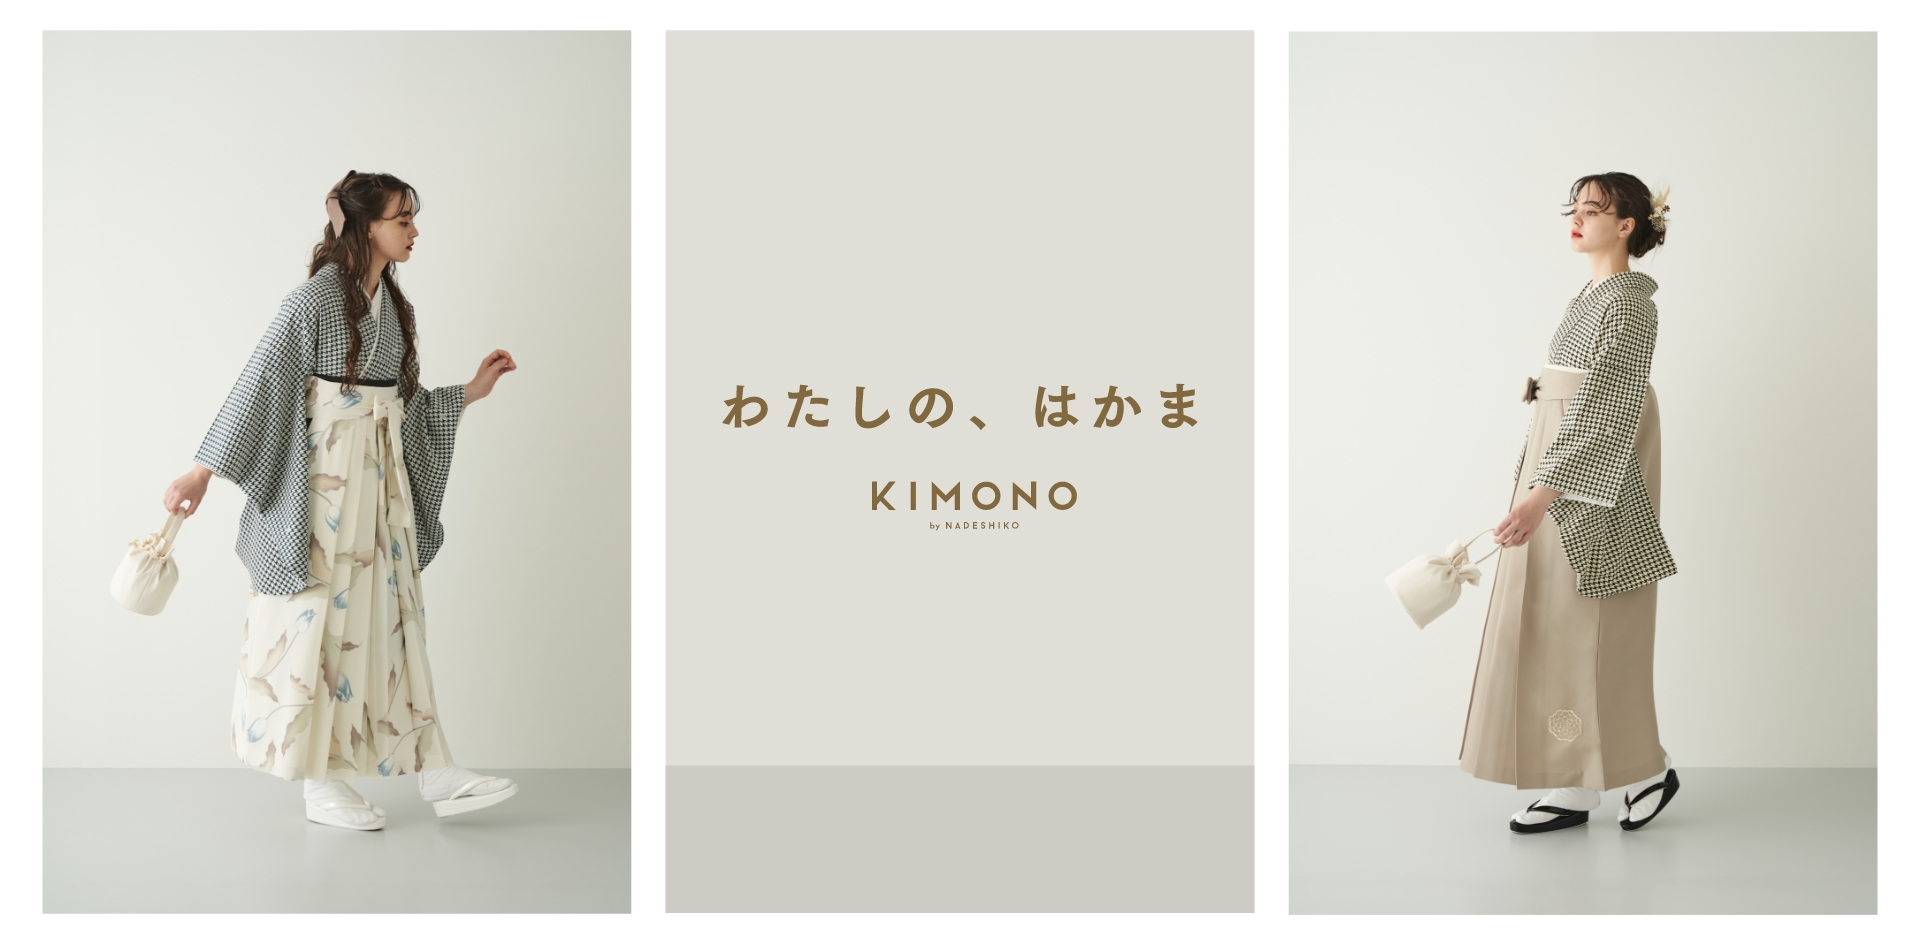 KIMONO by NADESHIKO わたしの、はかま